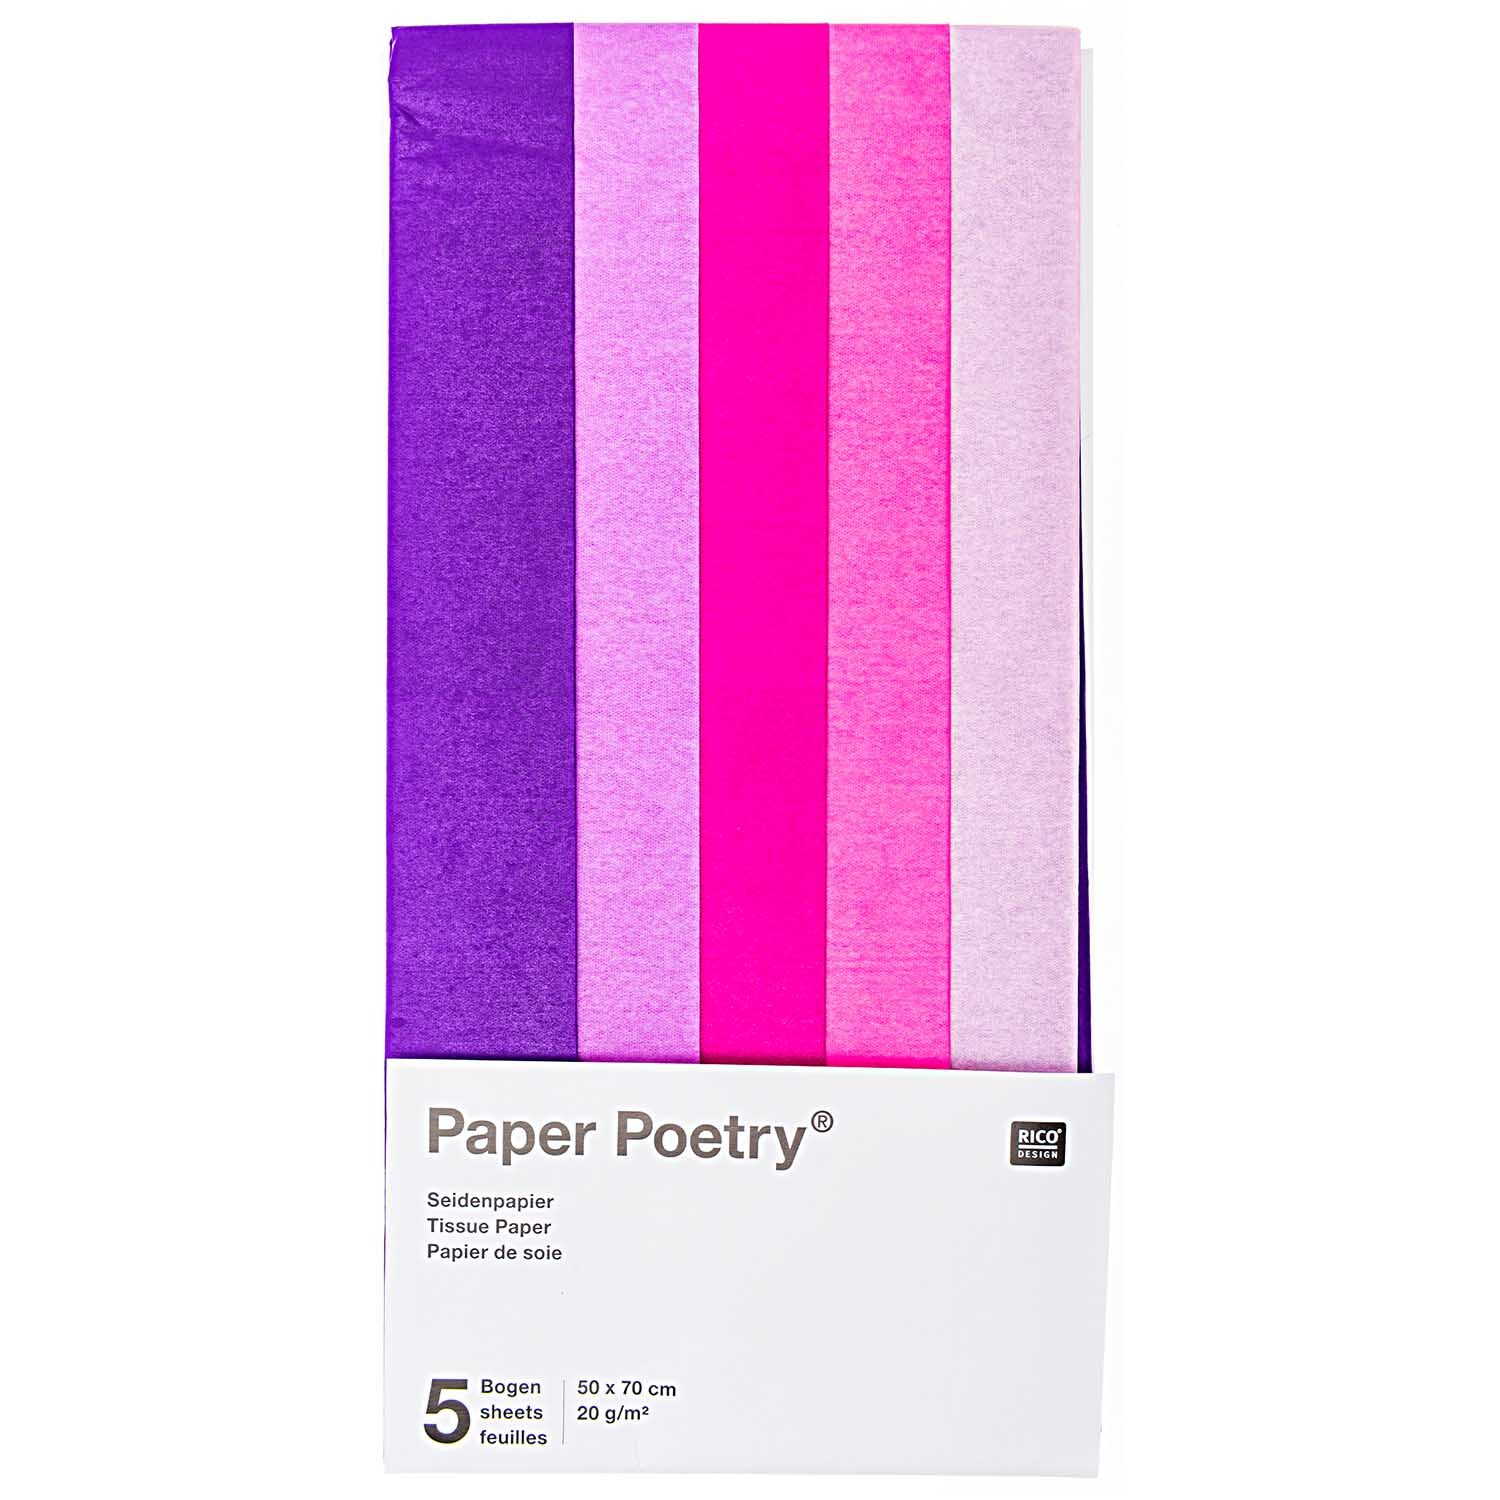 Paper Poetry Seidenpapier lila sortiert 50x70cm 5 Bogen